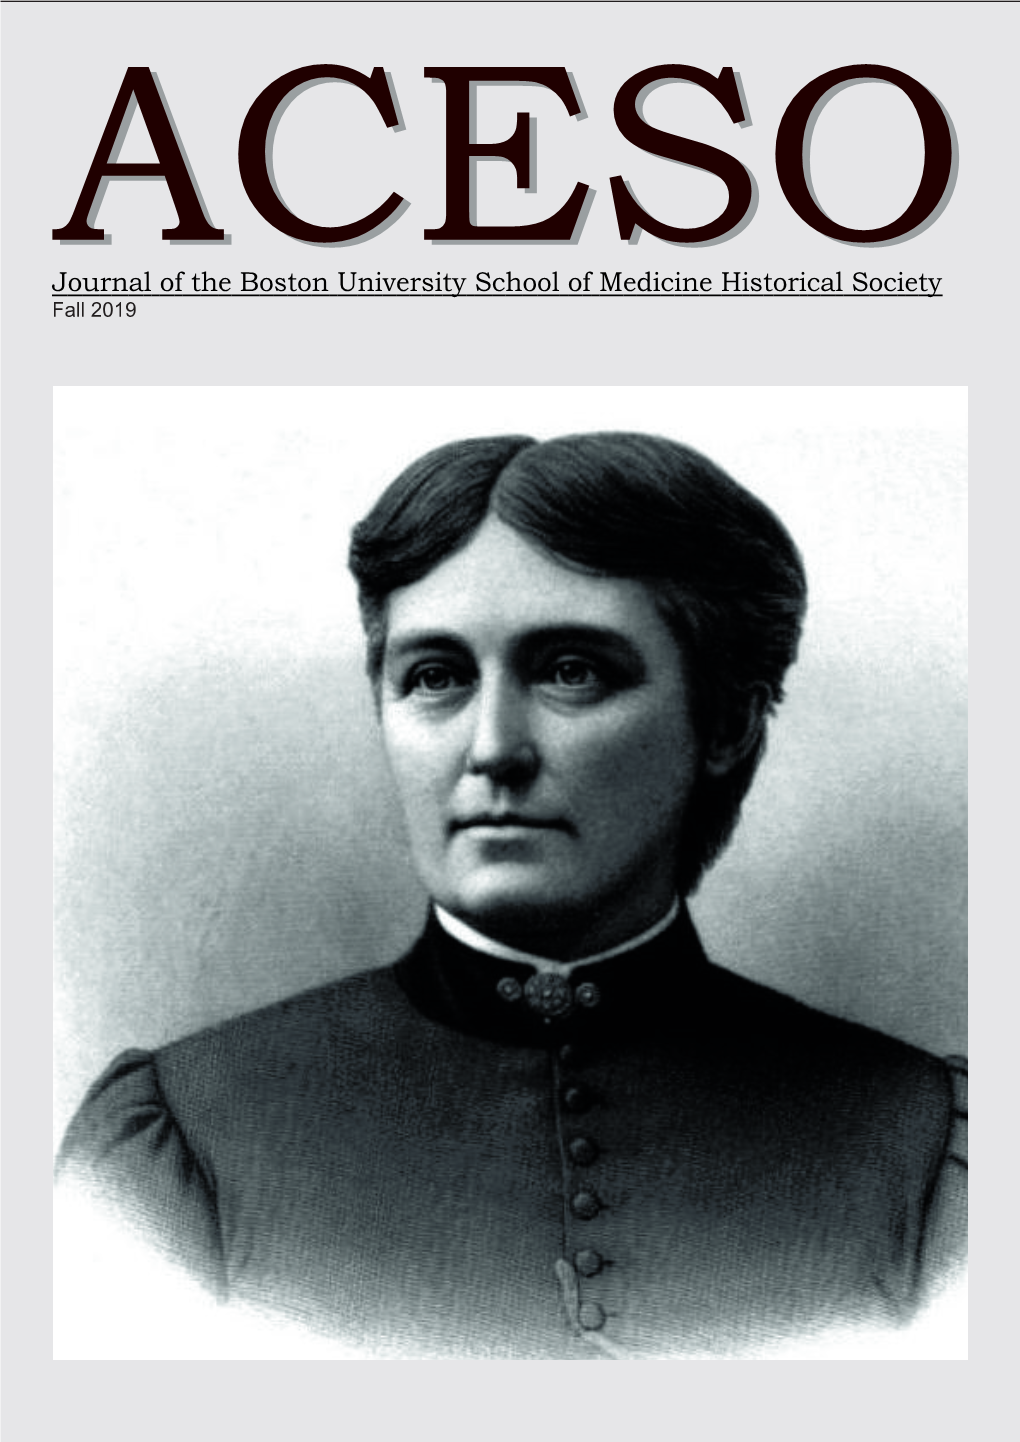 Journal of the Boston University School of Medicine Historical Society